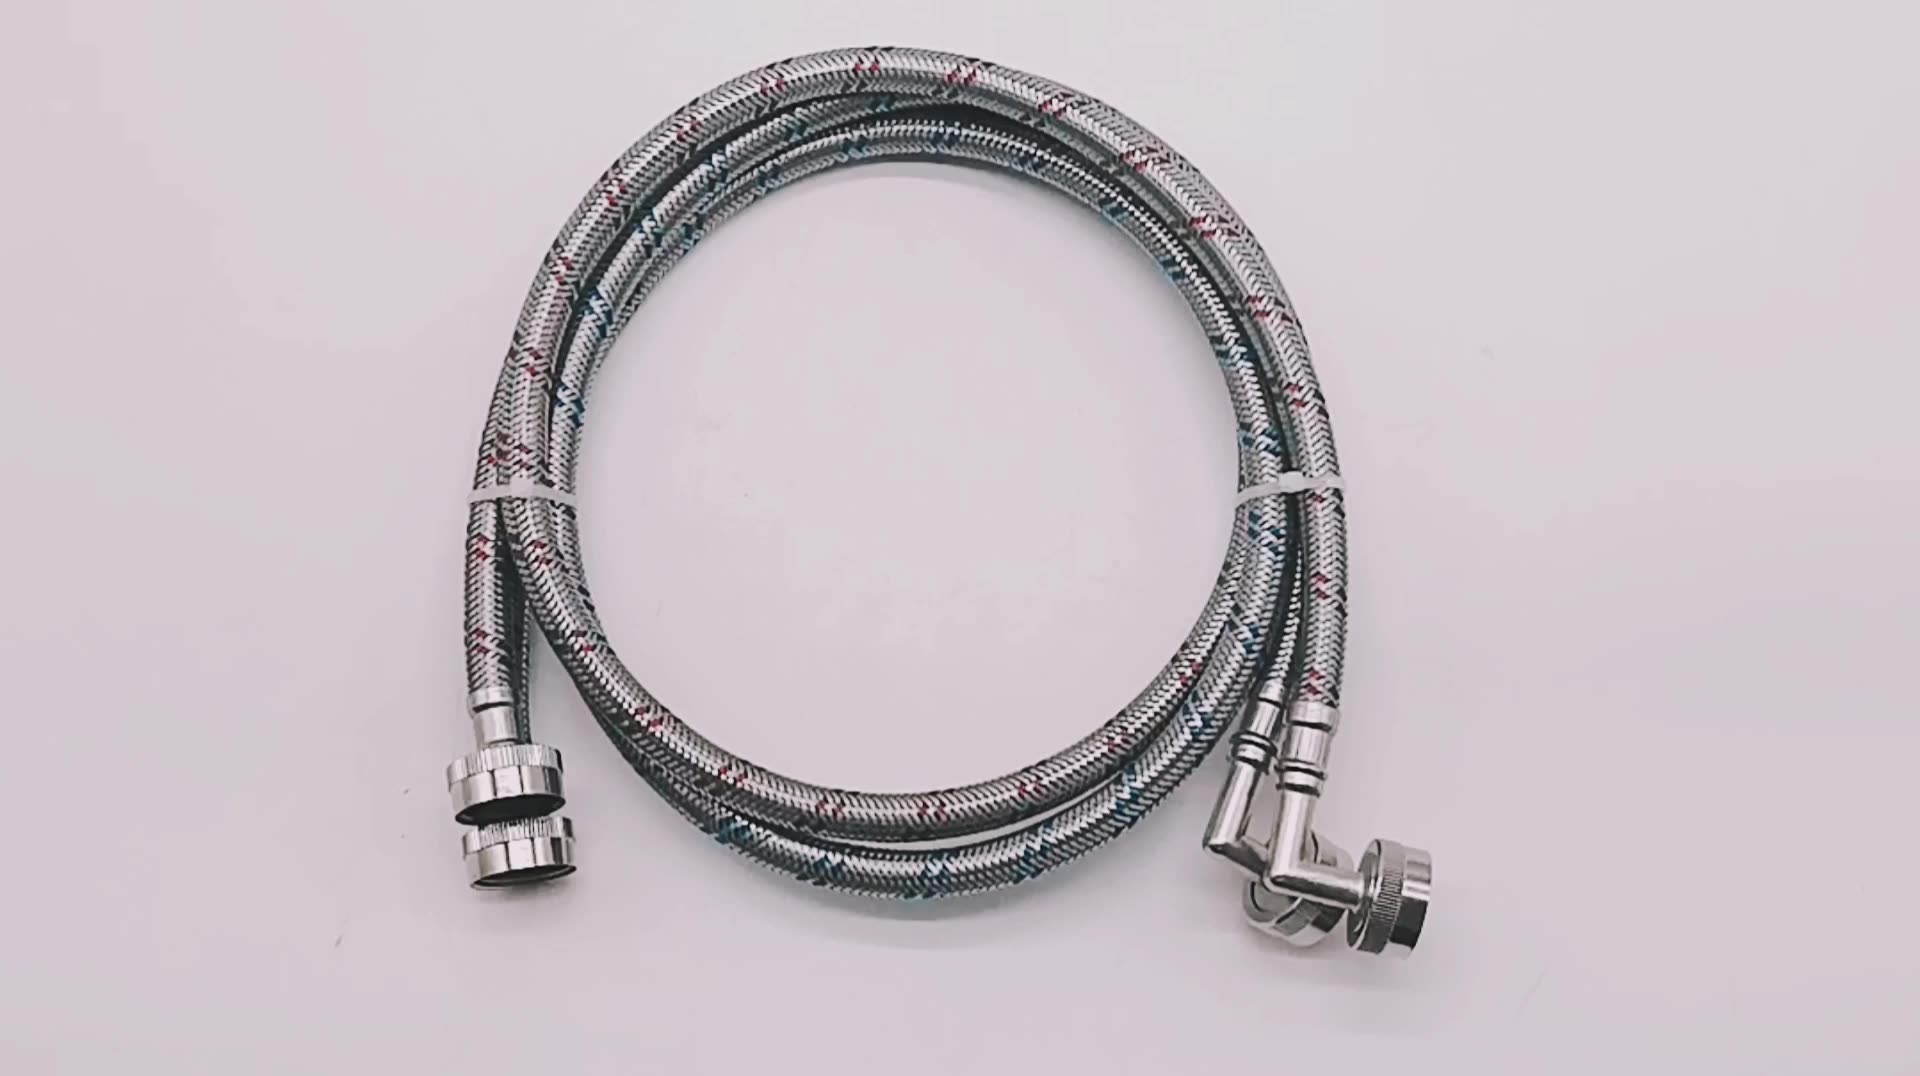 трубка для подачи пара 1312367axx steam hose with steel spring d 40mm фото 59